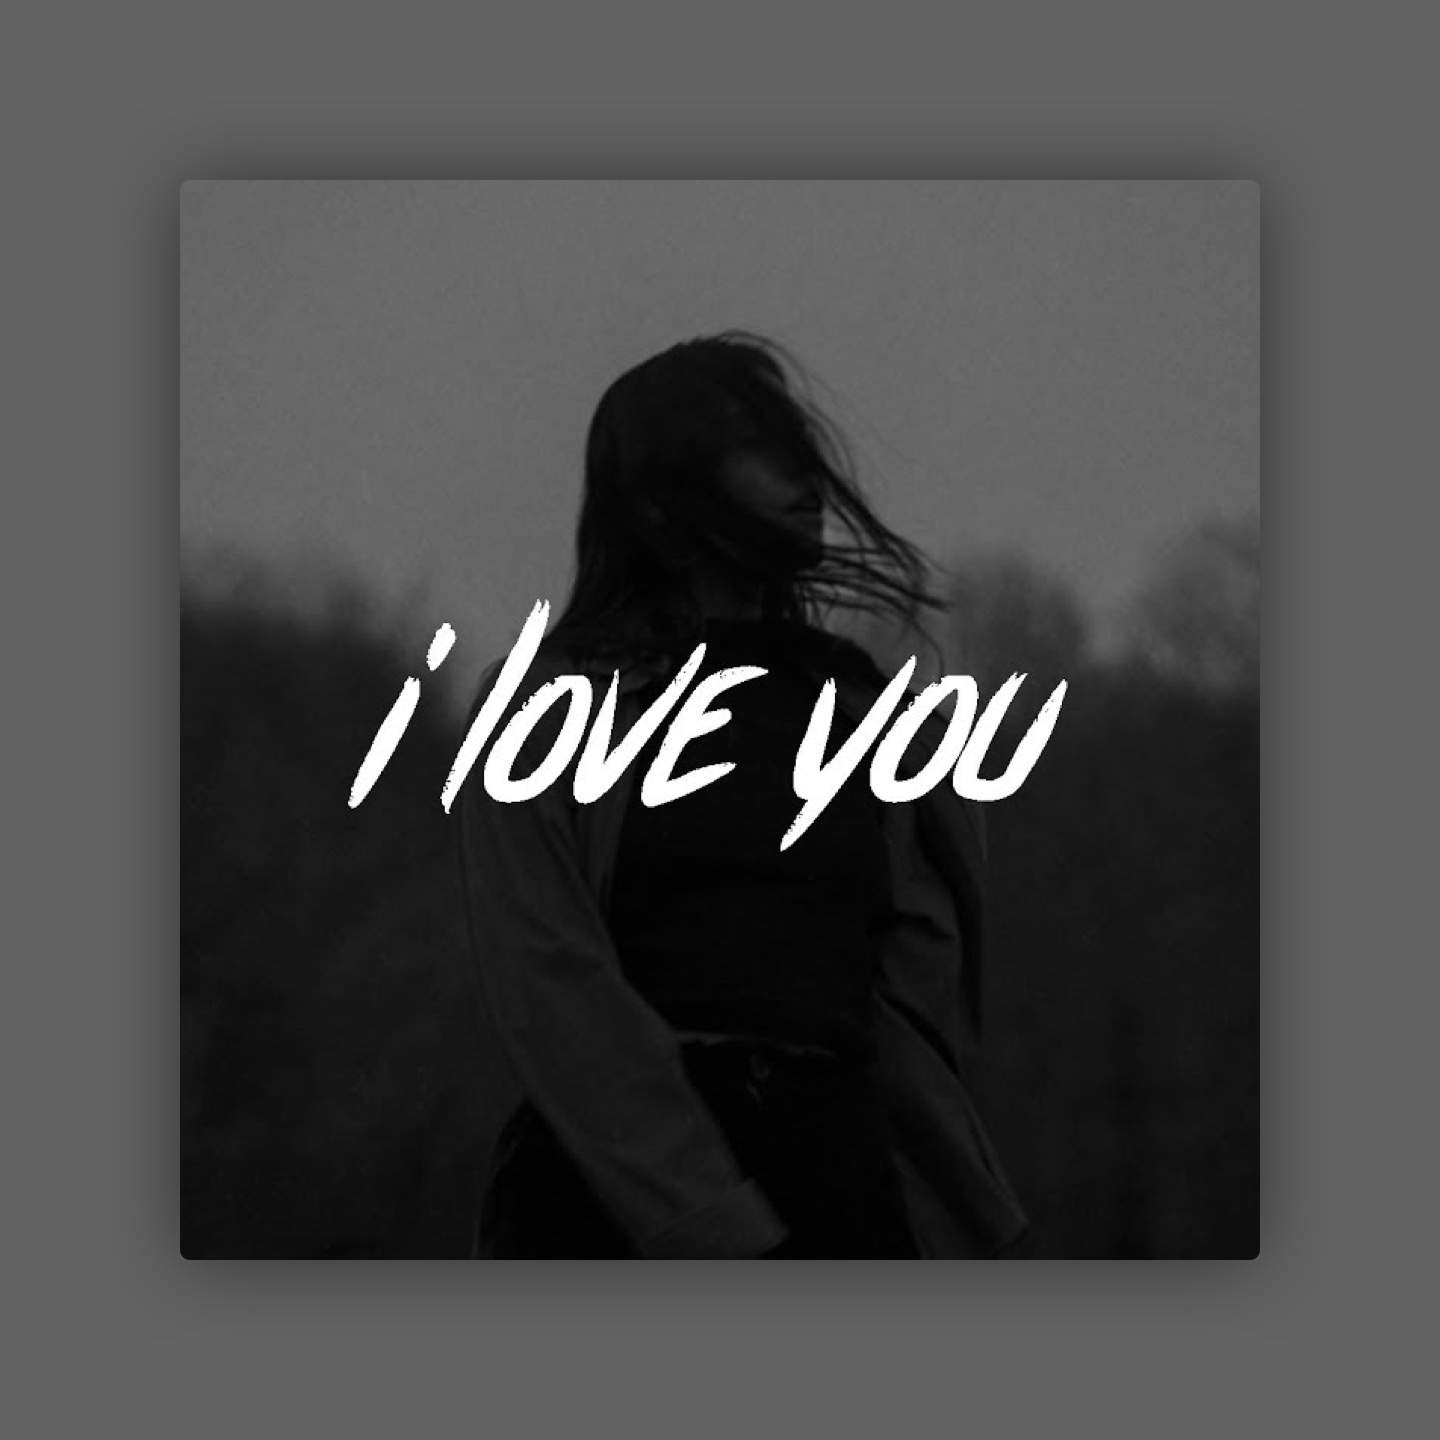 I Love You feat. Billie Eilish (Cavid Askerov Remix) -
                    Luxe radio